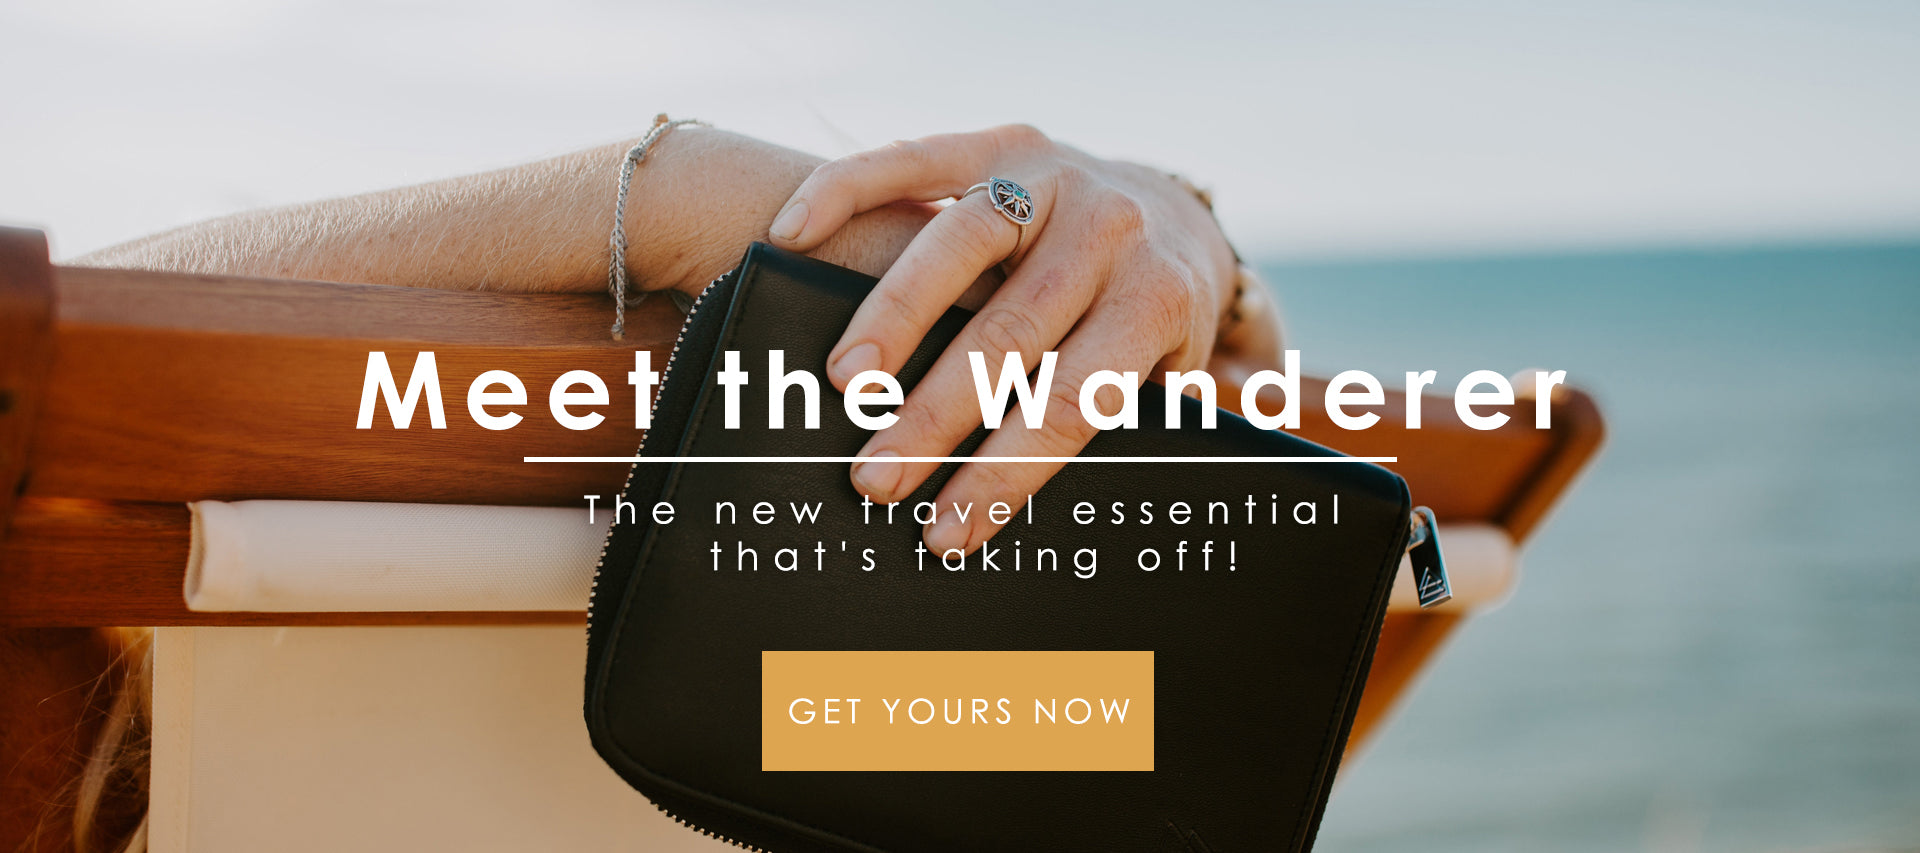 Meet the Wanderer - jewelry travel case